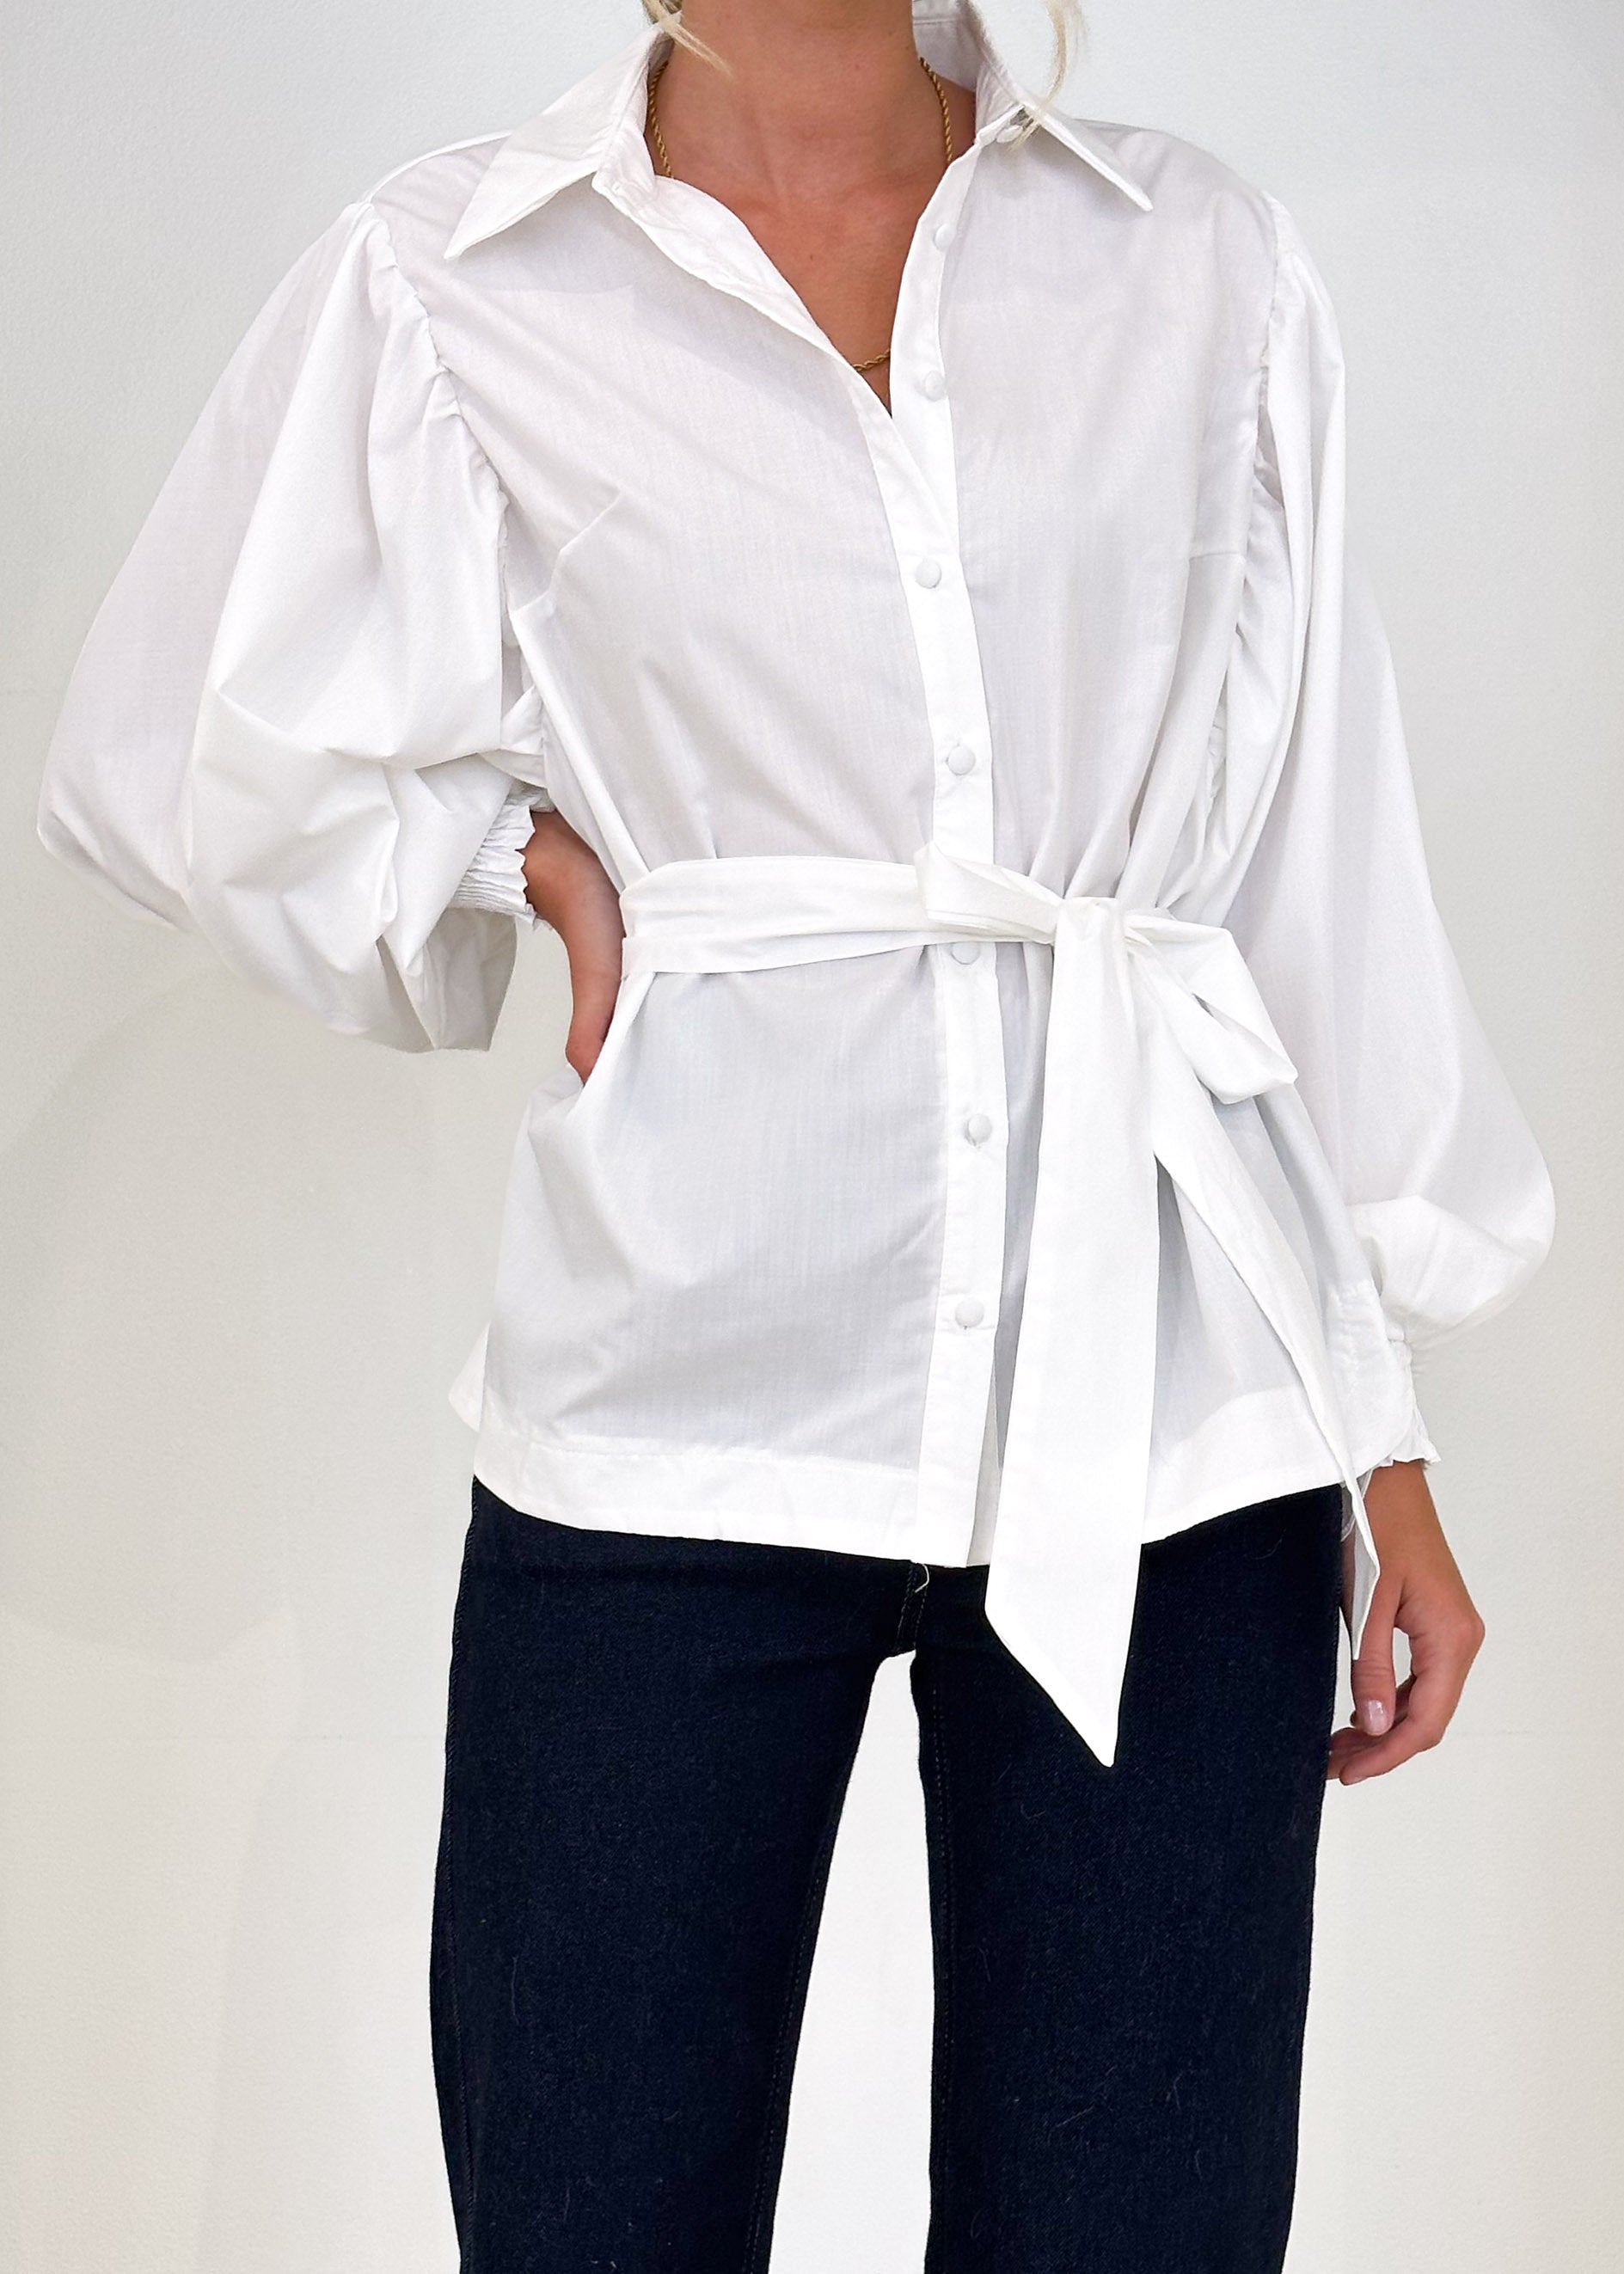 Archo Shirt - Off White